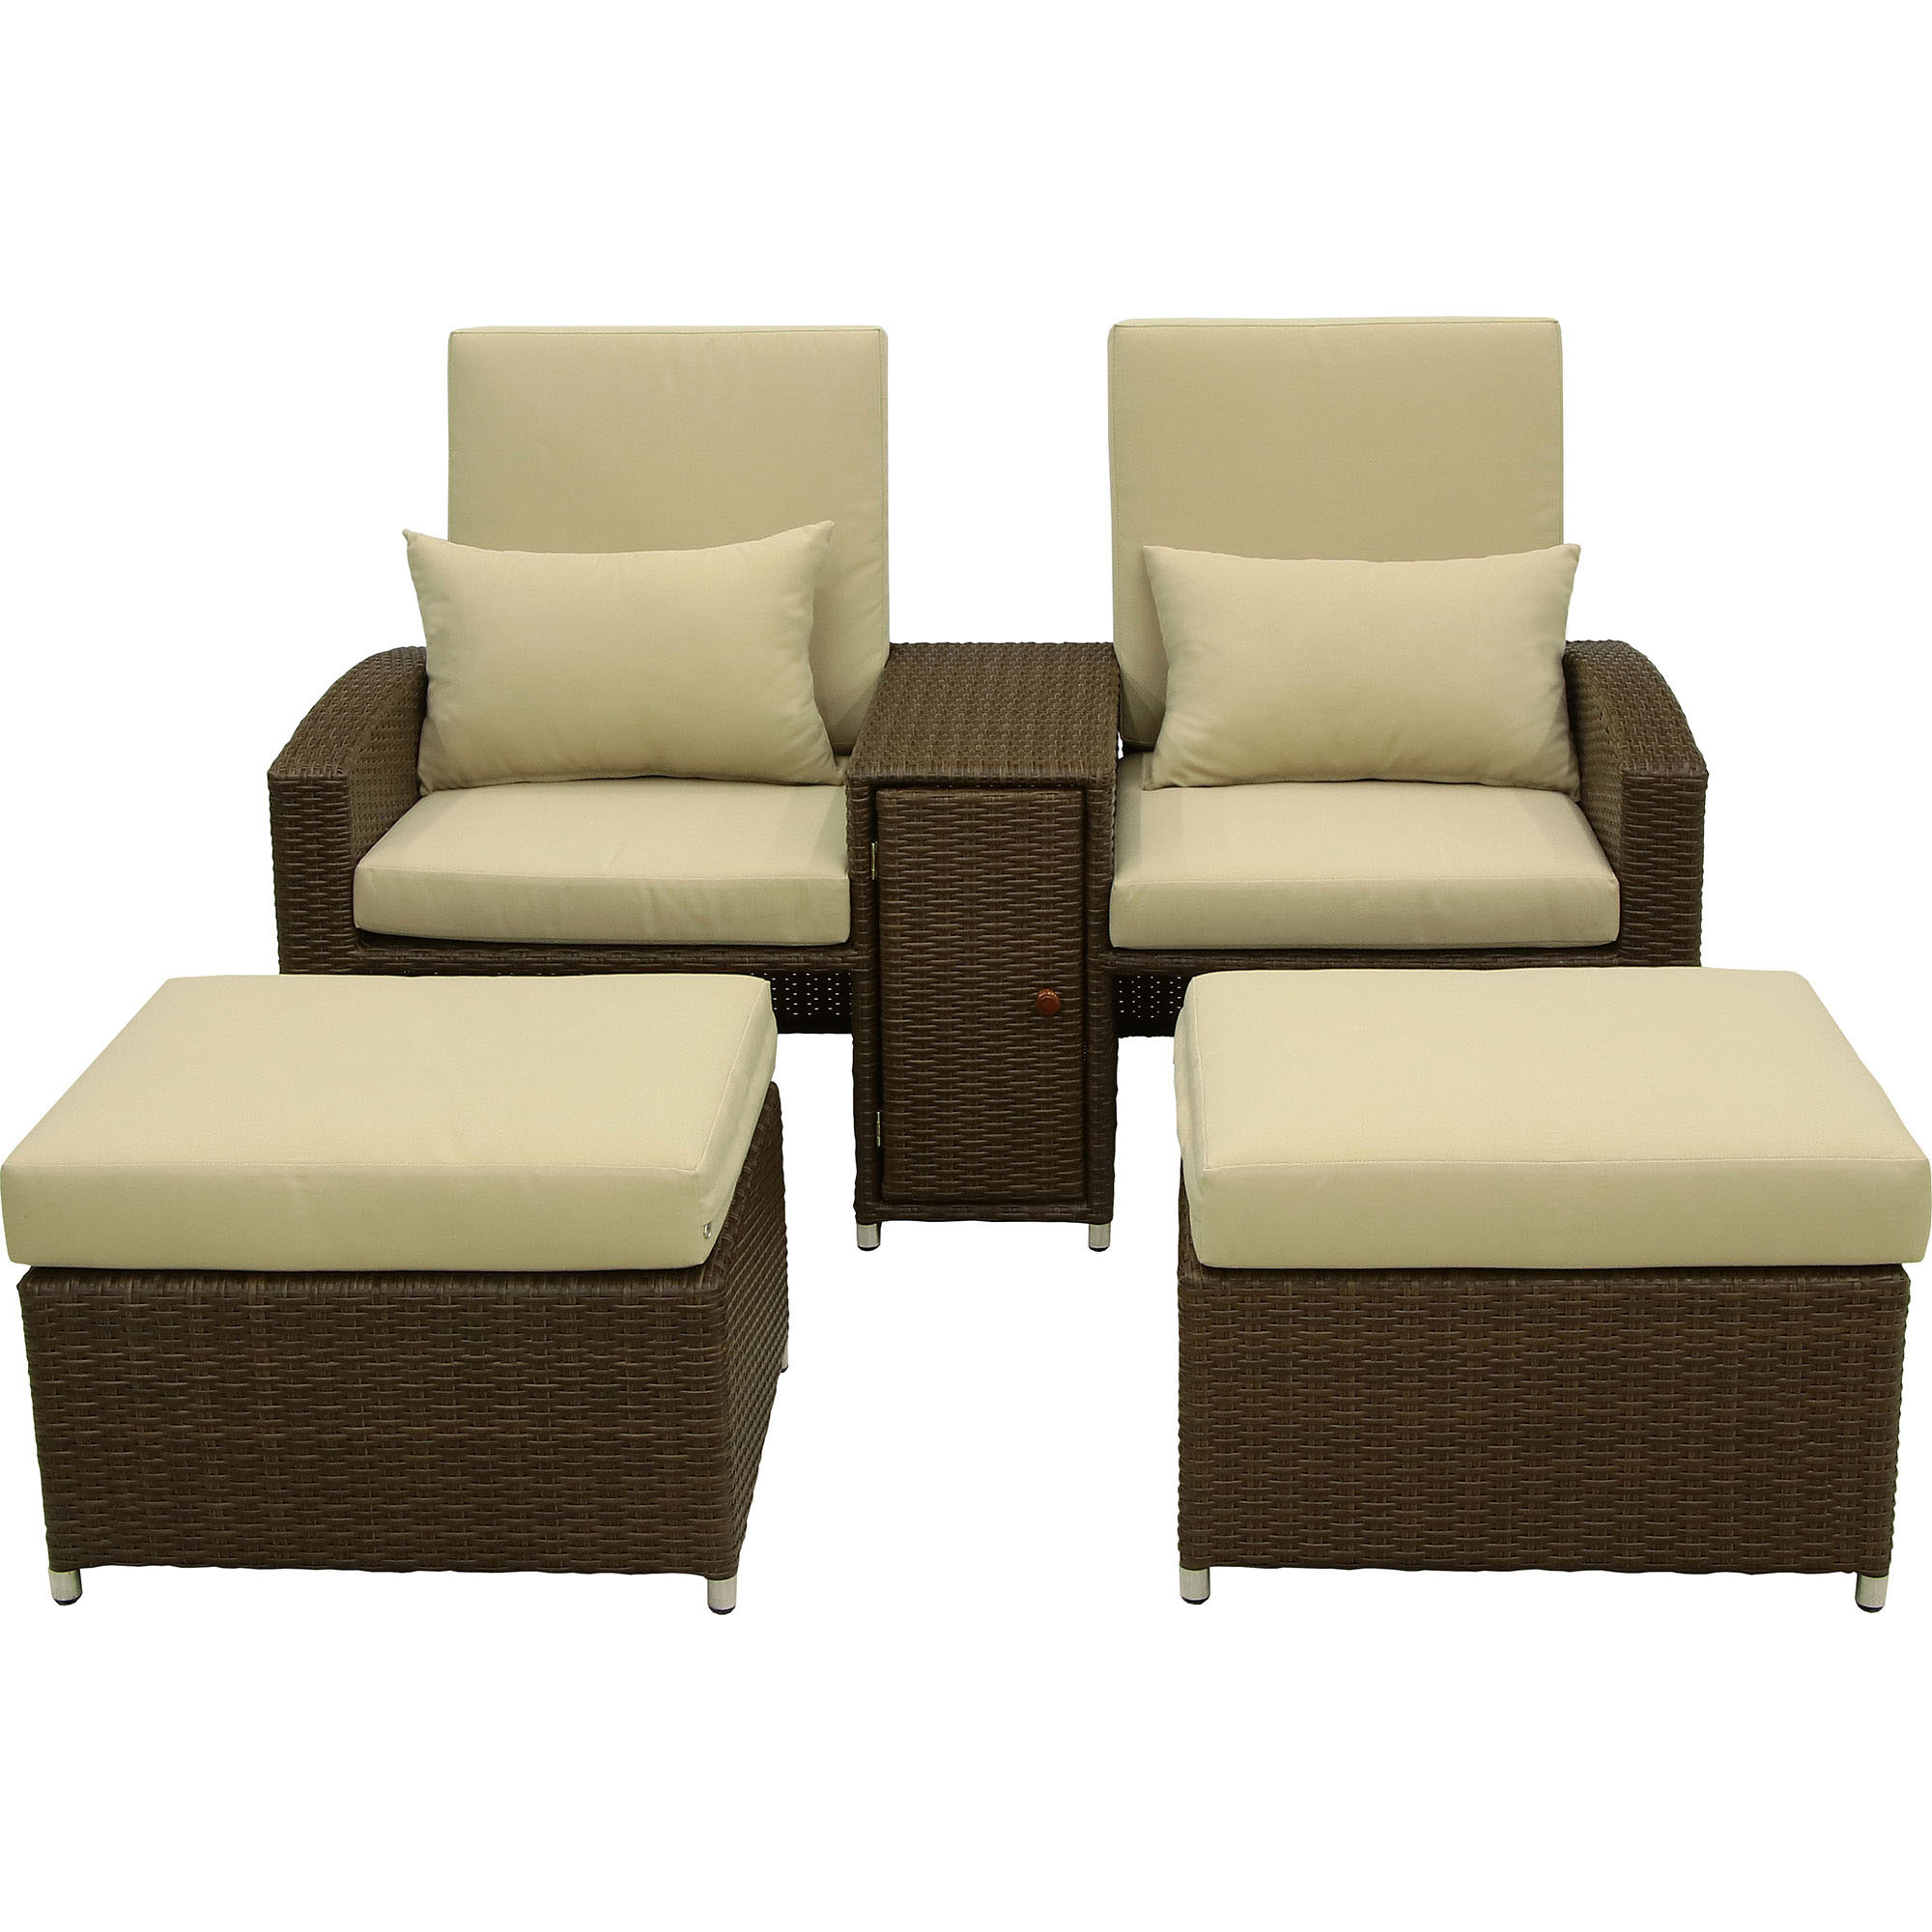 Комплект мебели Ronica Deli коричневый 4 предмета, цвет светло-коричневый, размер 74х164х100 - фото 2